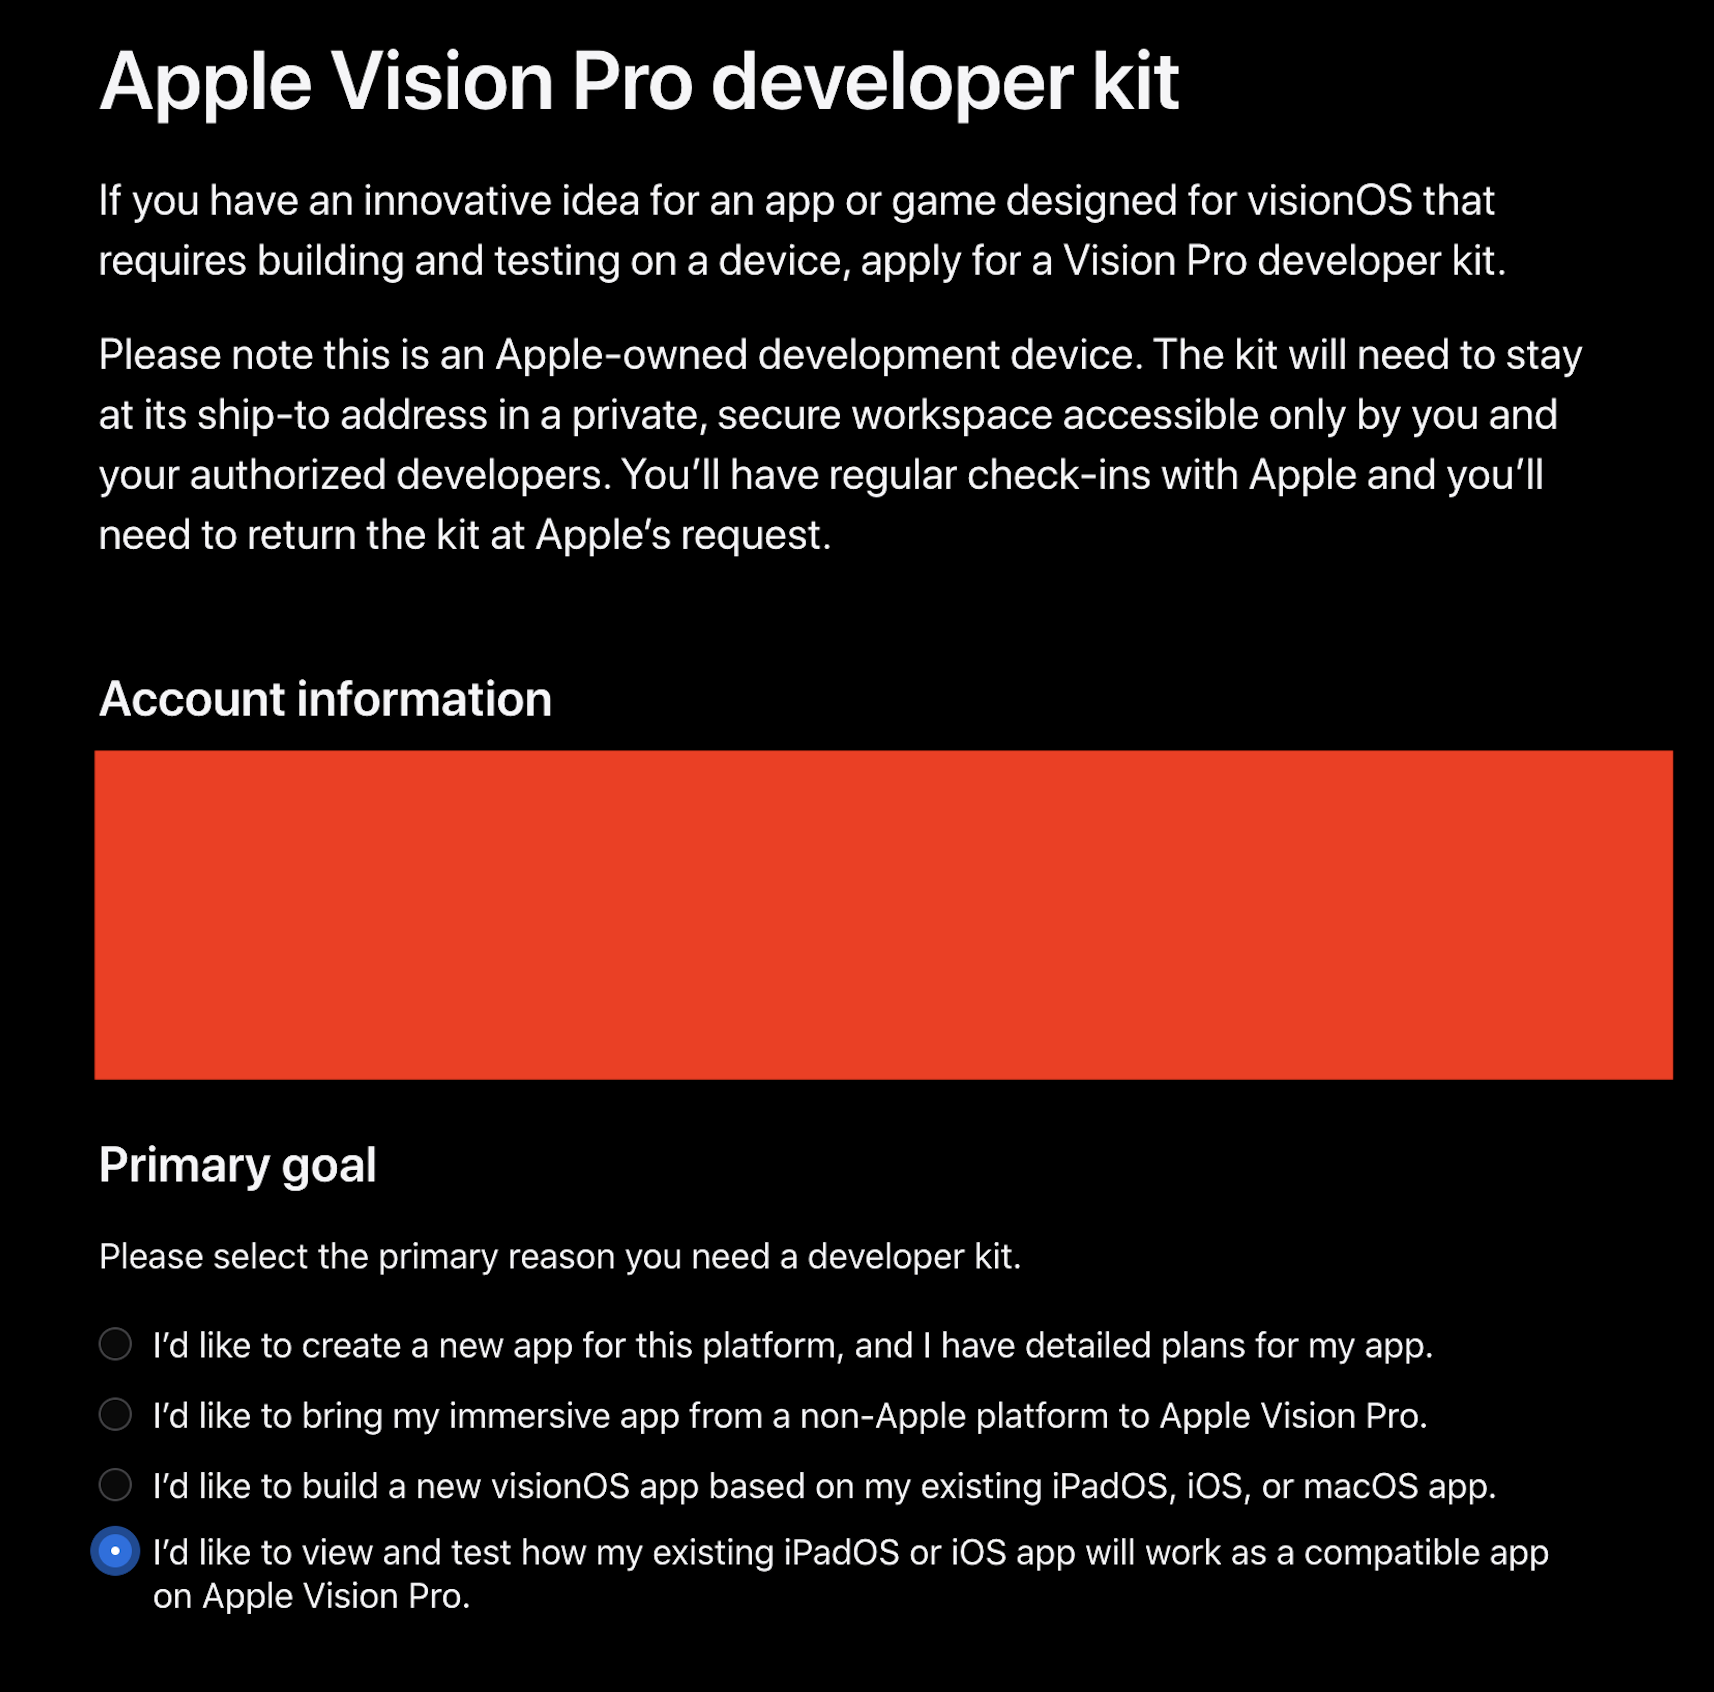 visionPro developer kit apply